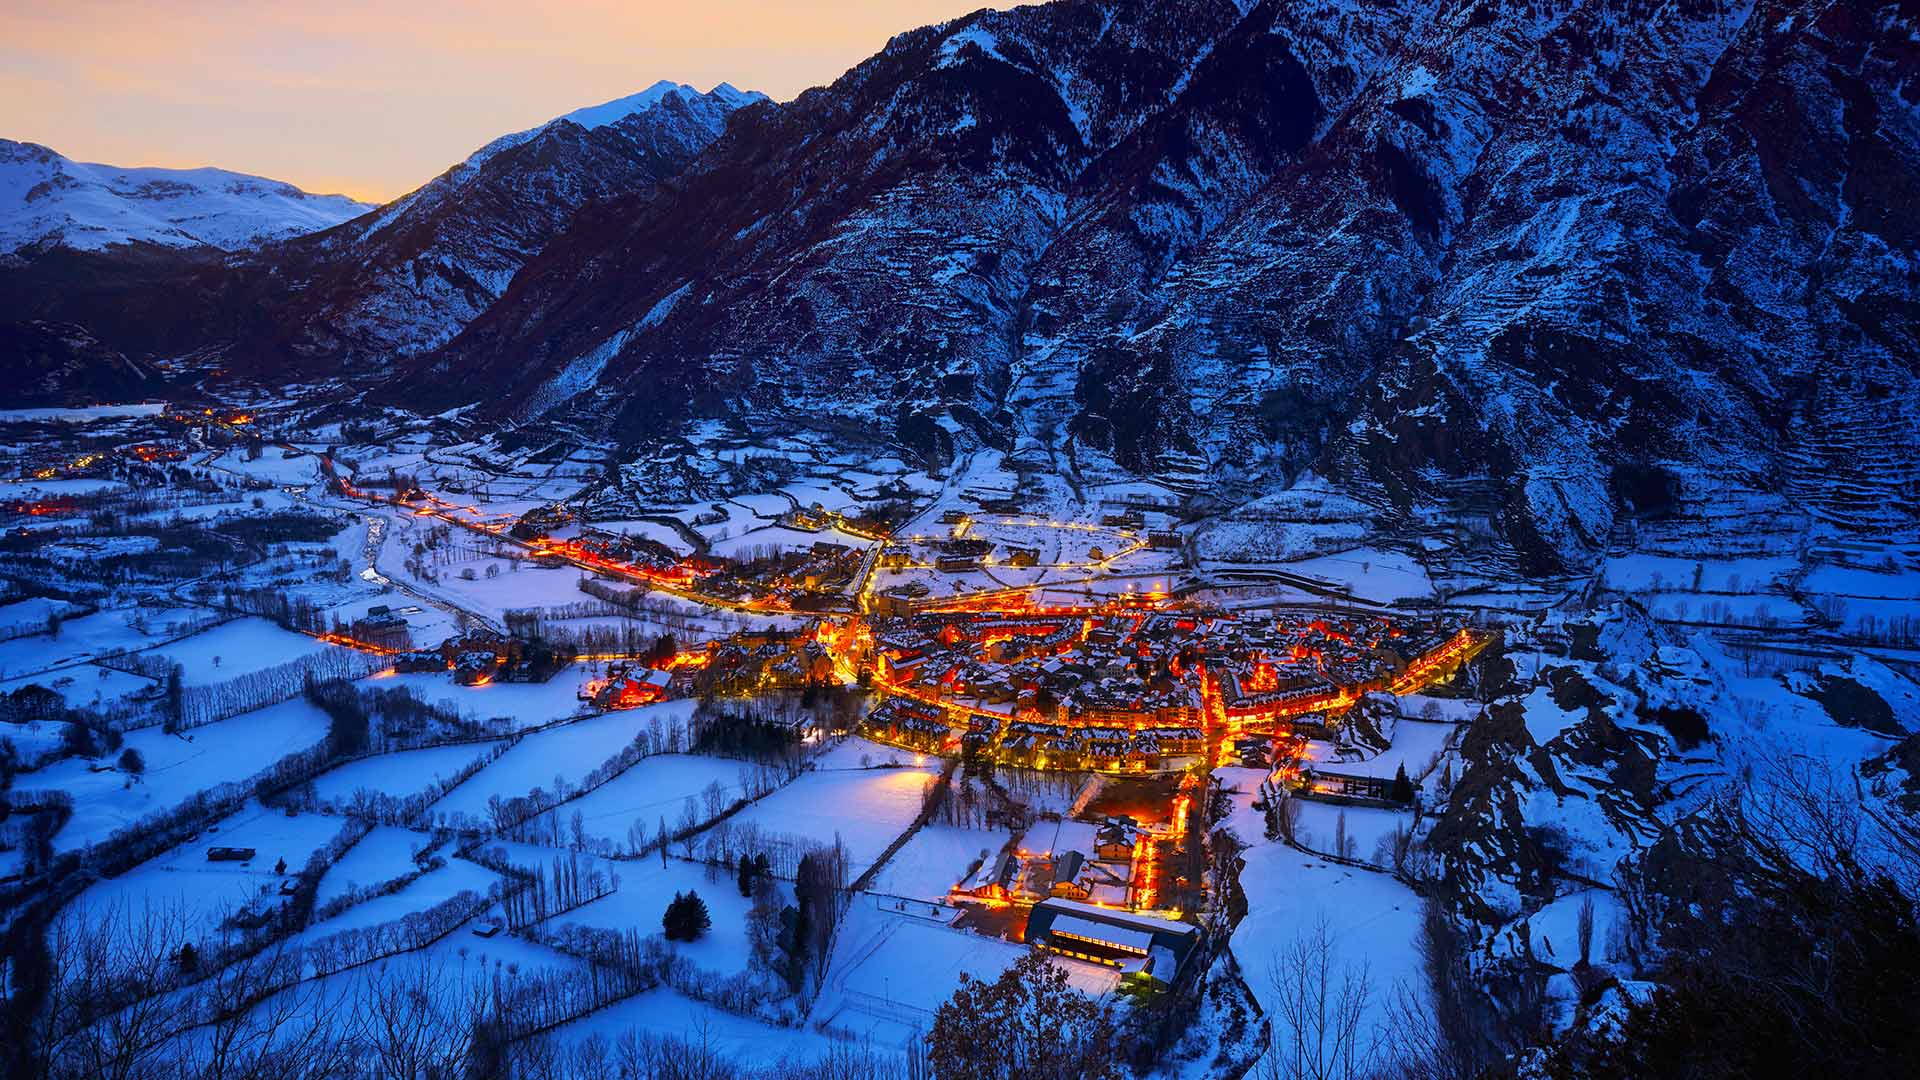 The village of Benasque, Huesca, Spain - Miscellaneoustock/Alamy)